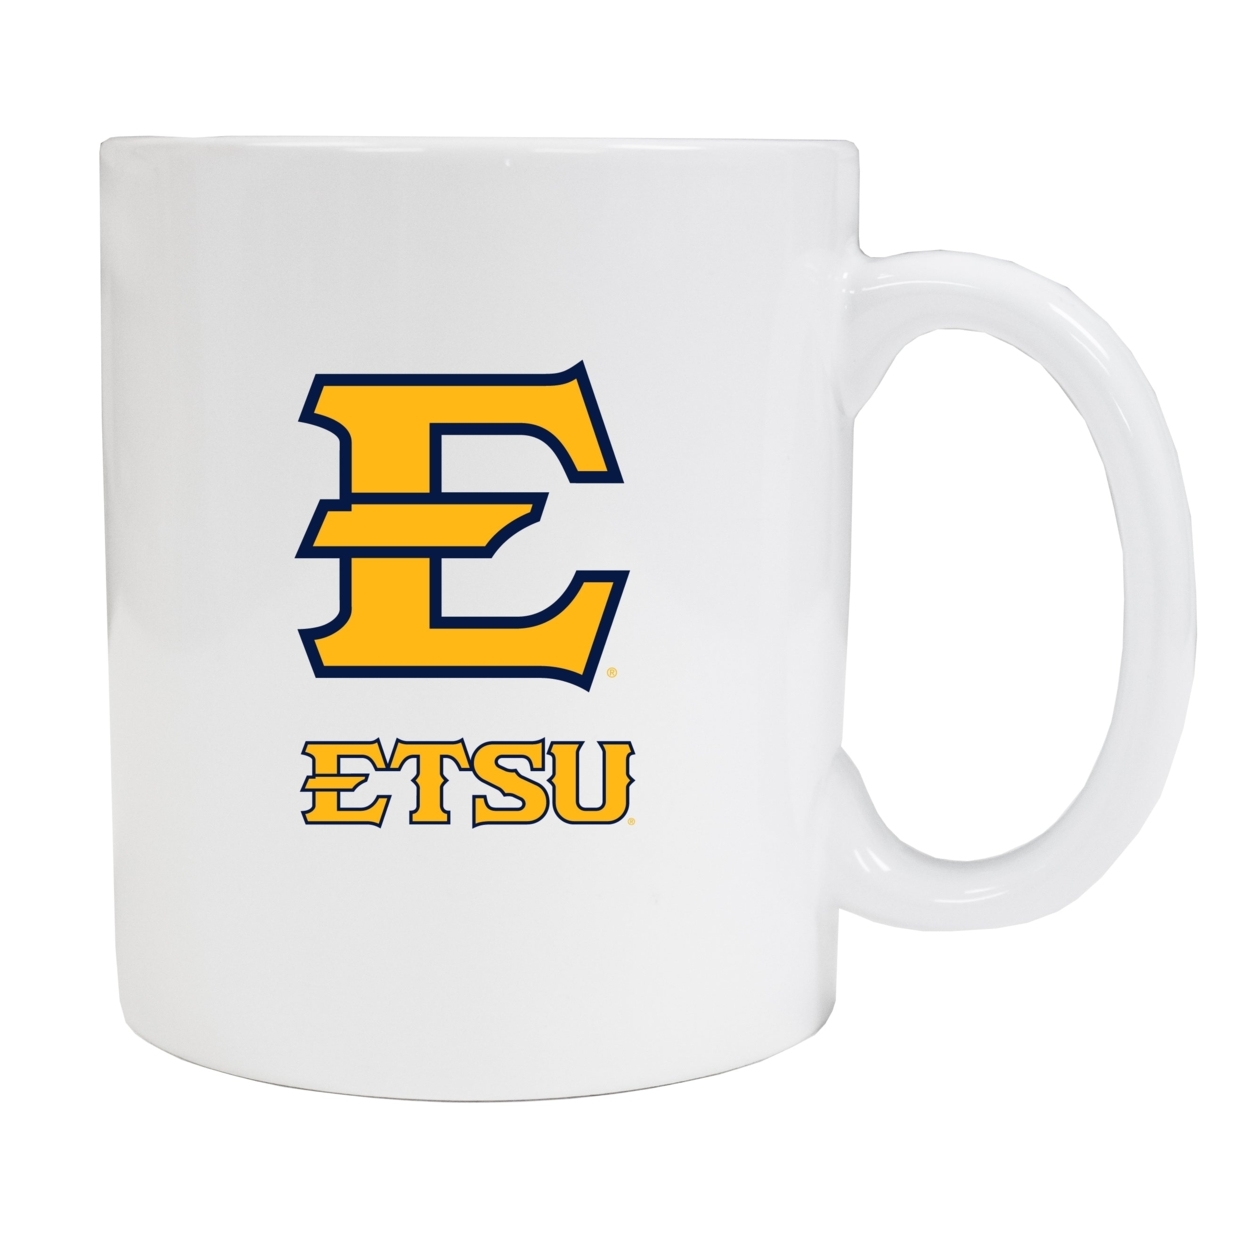 East Tennessee State University White Ceramic Mug (White).